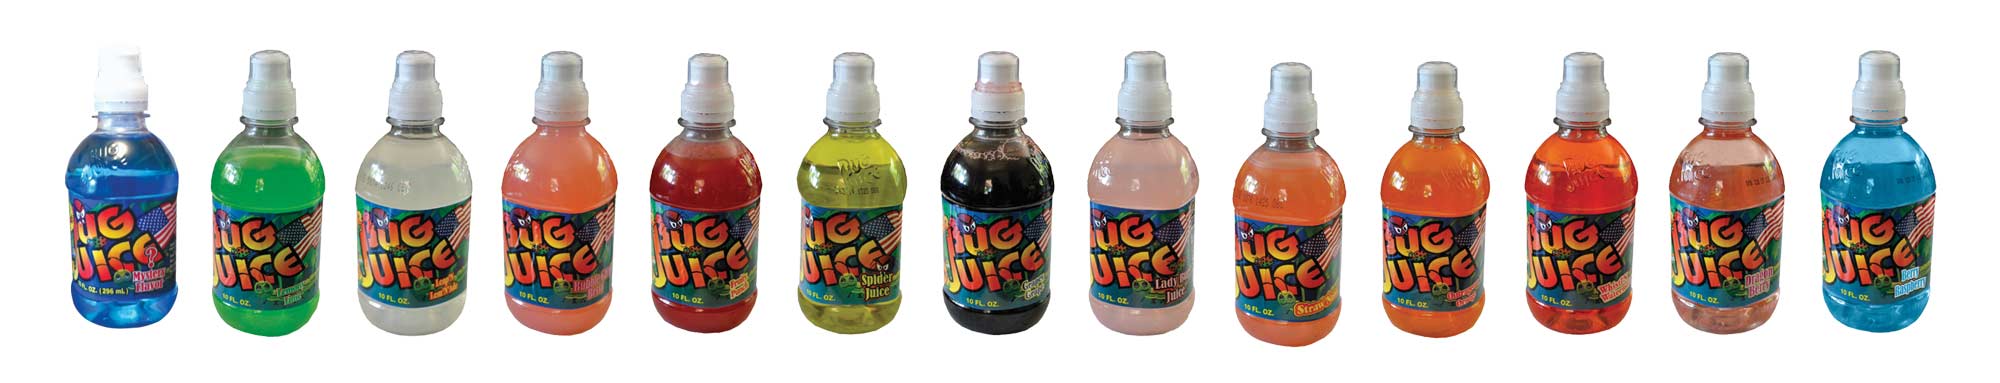 bug juice bottles-flavor array